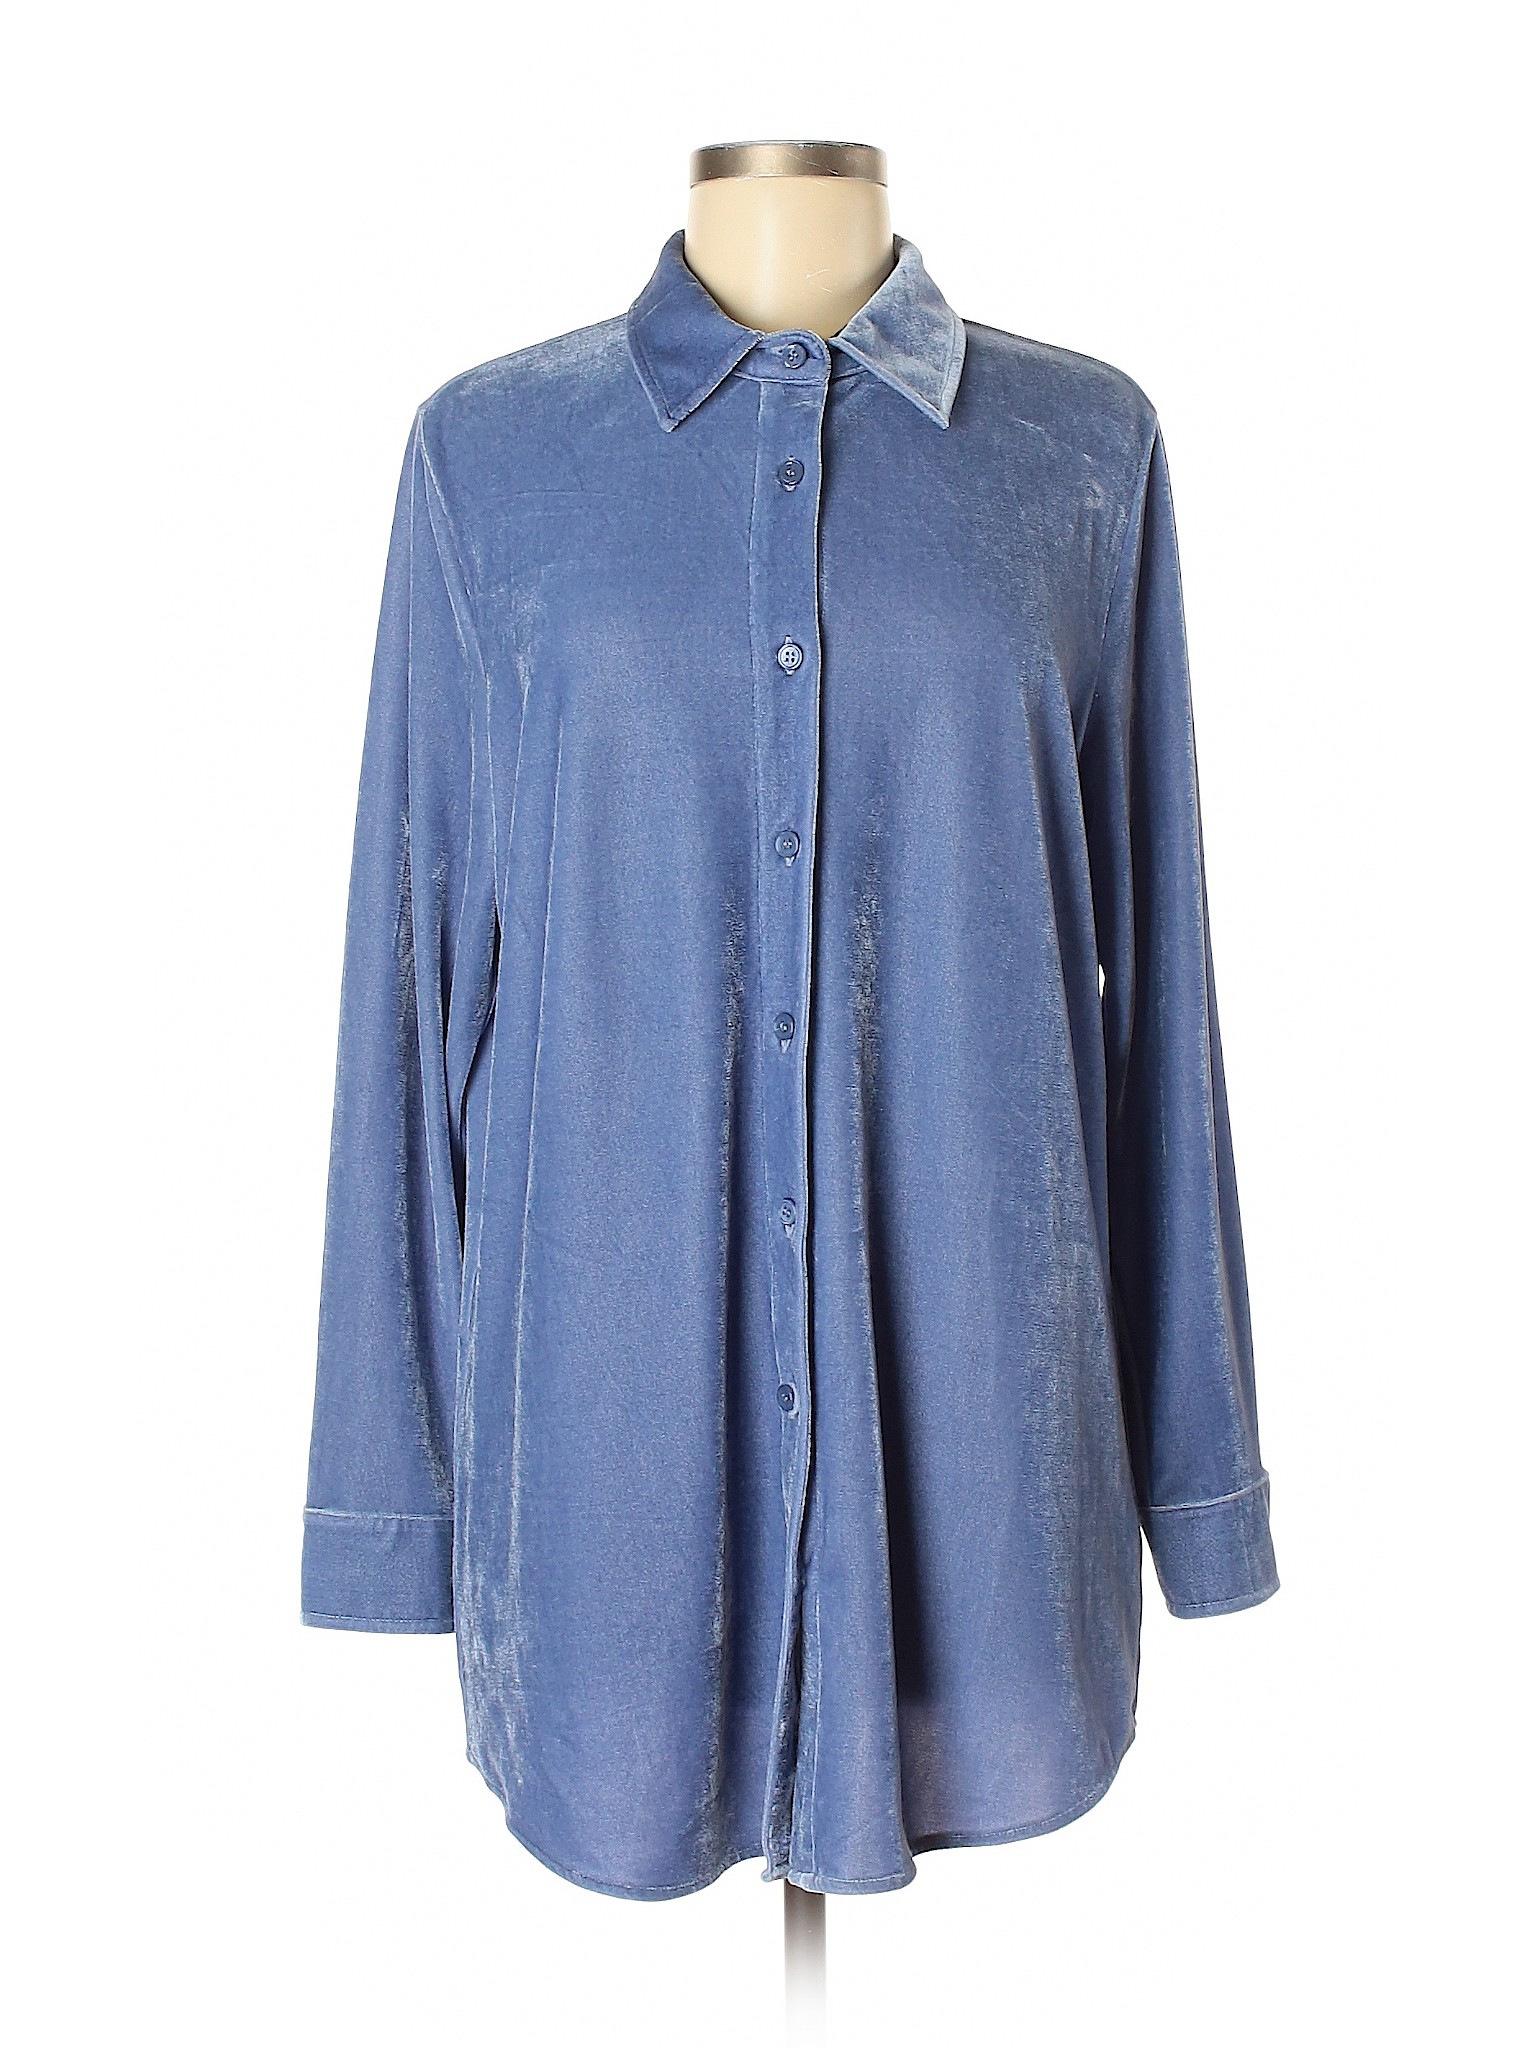 Soft Surroundings Women Blue Long Sleeve Blouse M | eBay